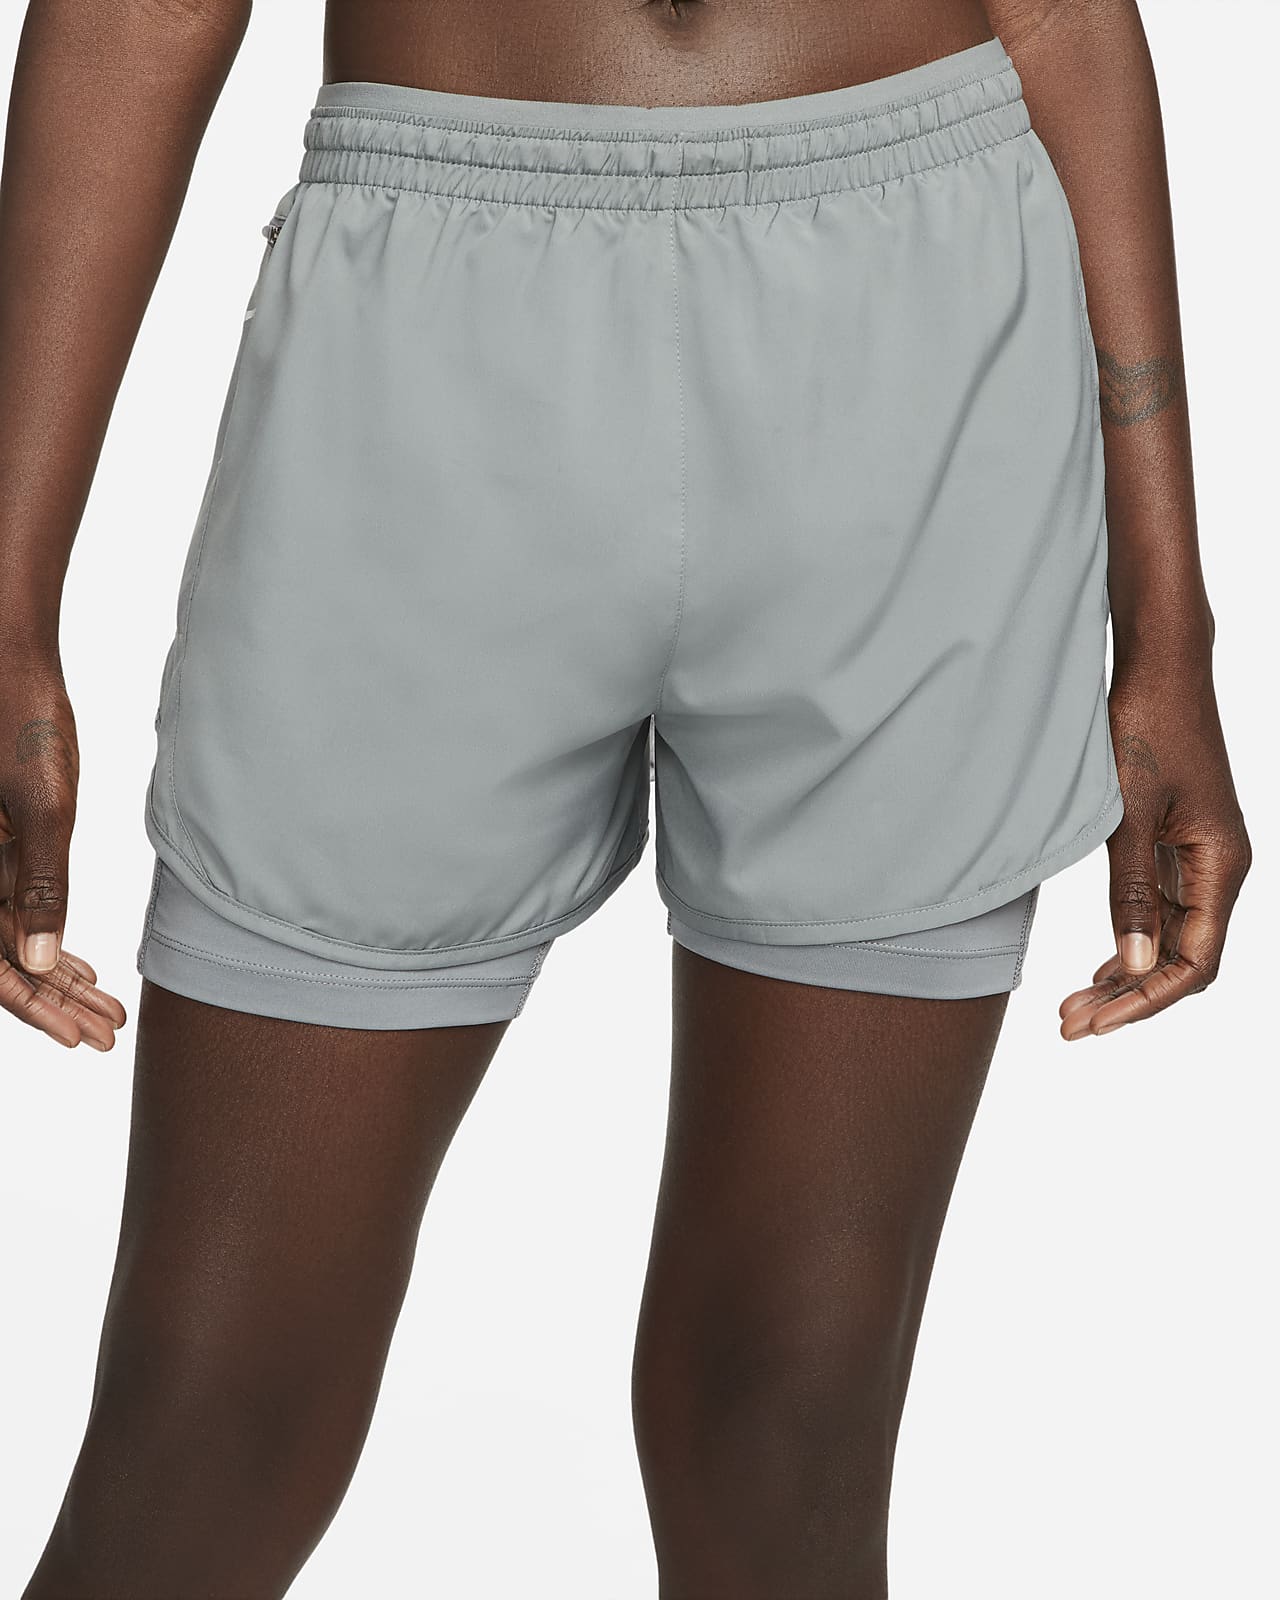 Nike Tempo Women's 2-In-1 Running Shorts.